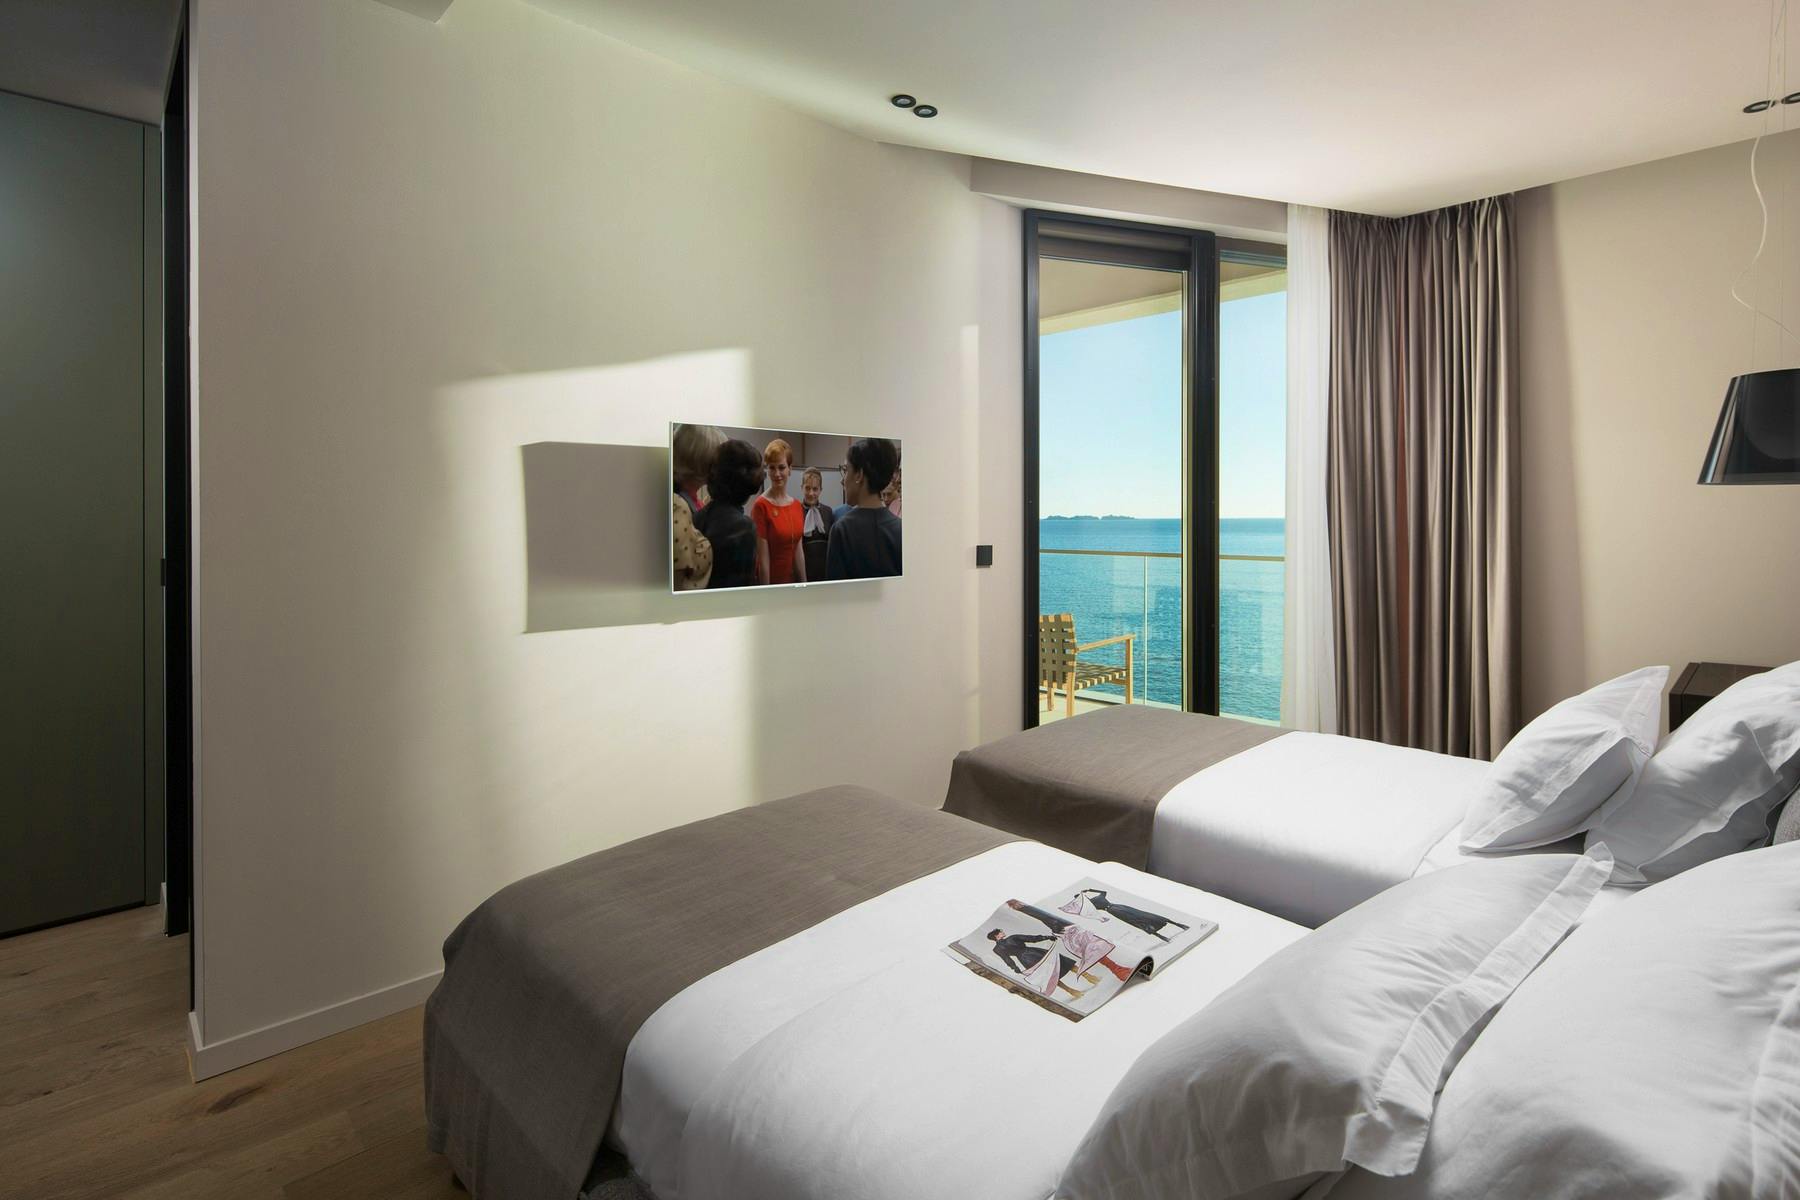 Twin bedroom boasting sea view